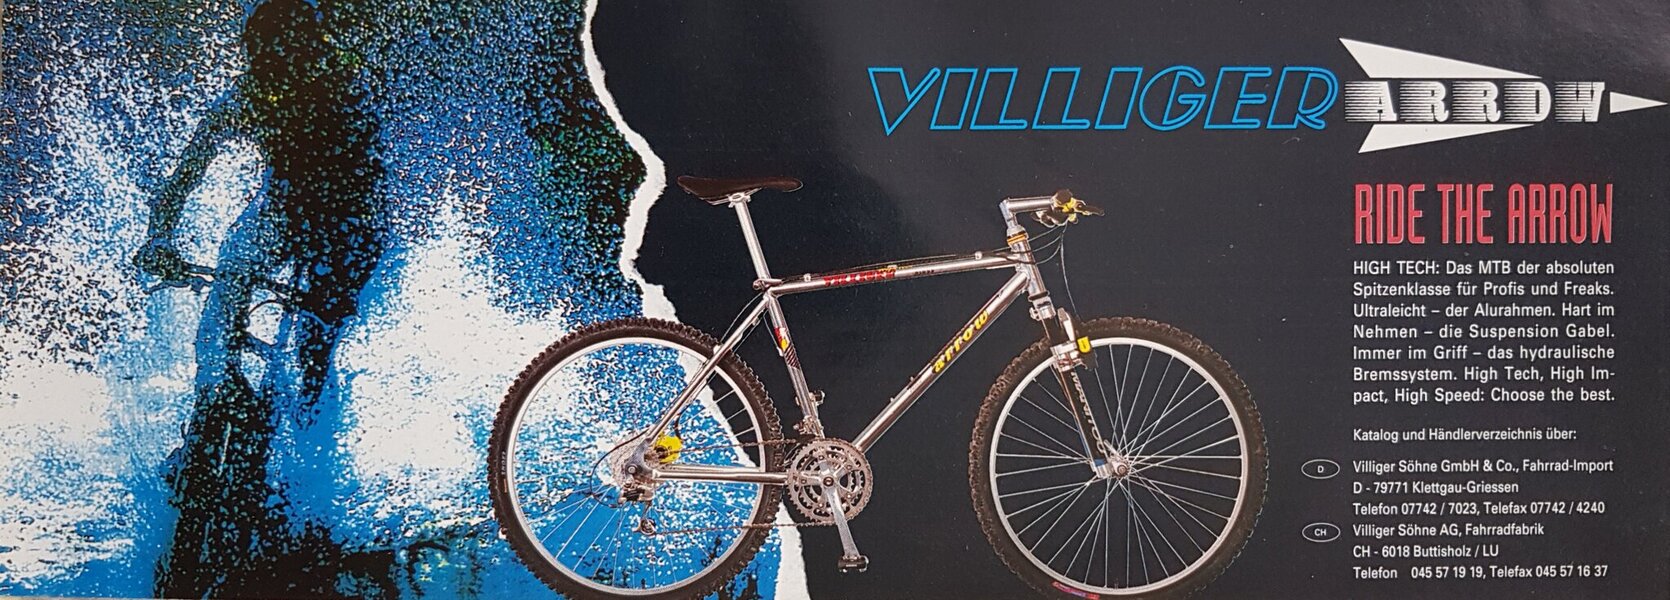 Villiger Arrow Ad aus Bike 1994.jpg